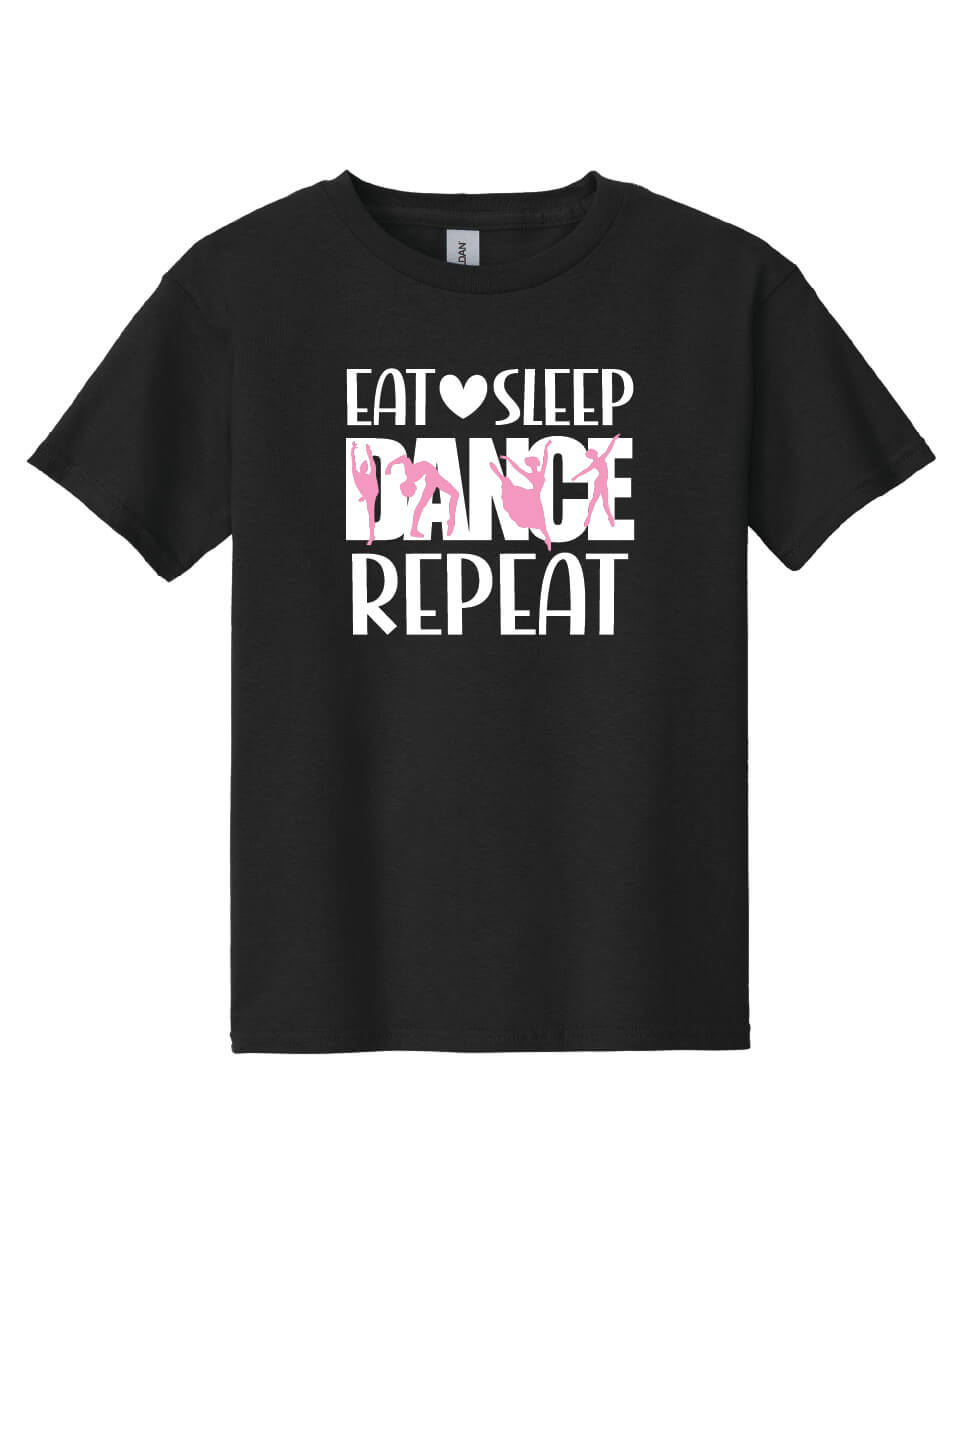 Eat Sleep Dance Repeat Short Sleeve T-Shirt (Youth) black